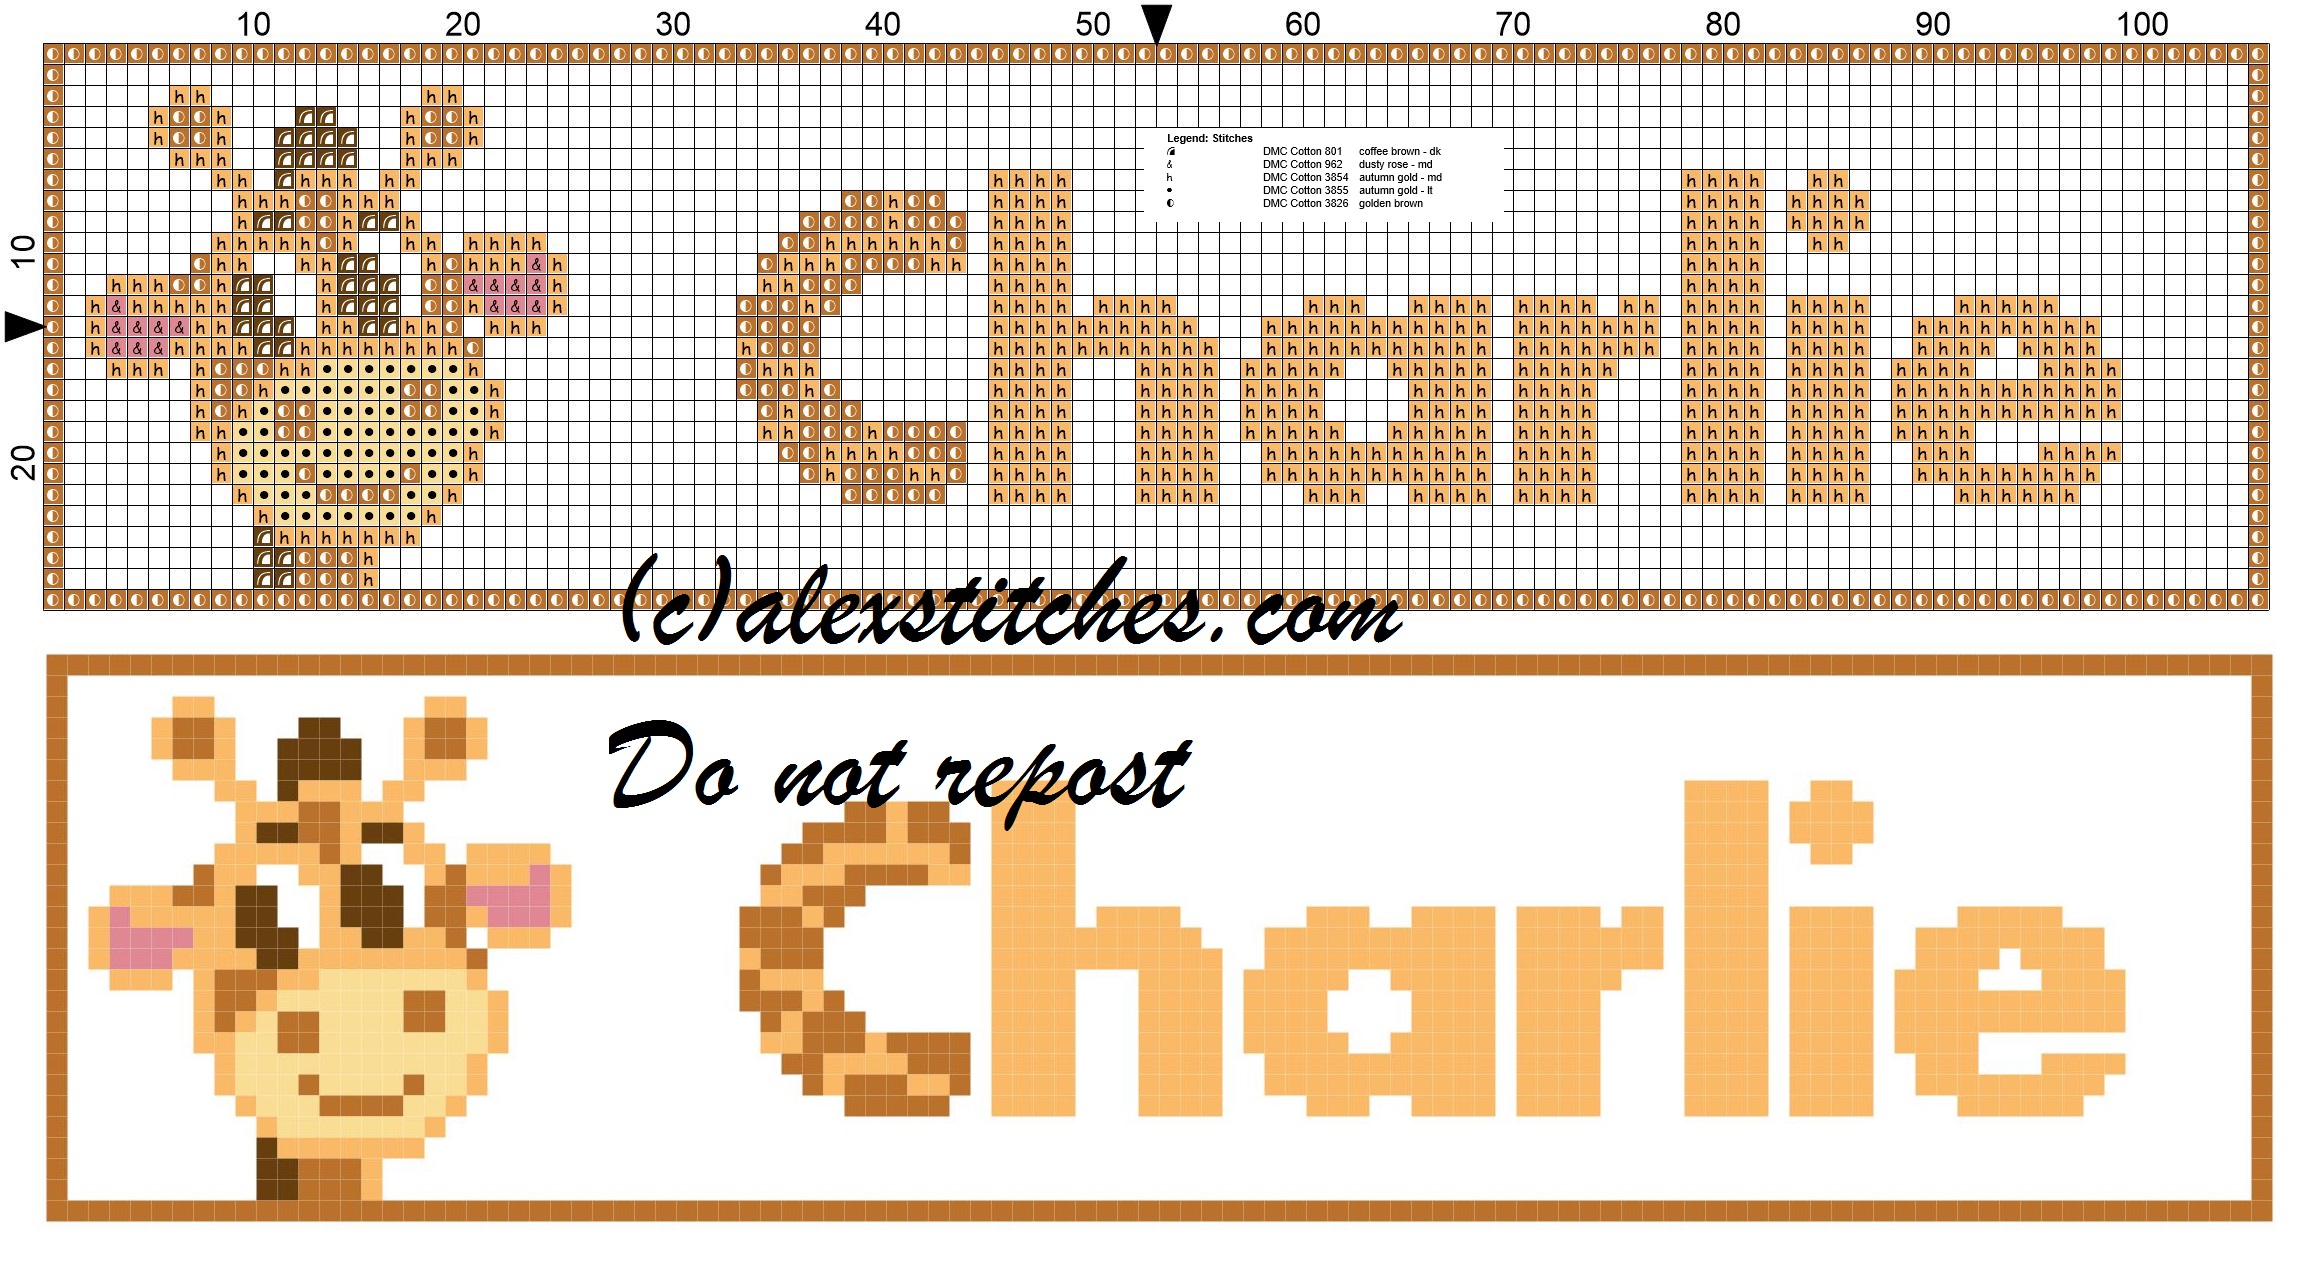 Charlie name with giraffe cross stitch pattern